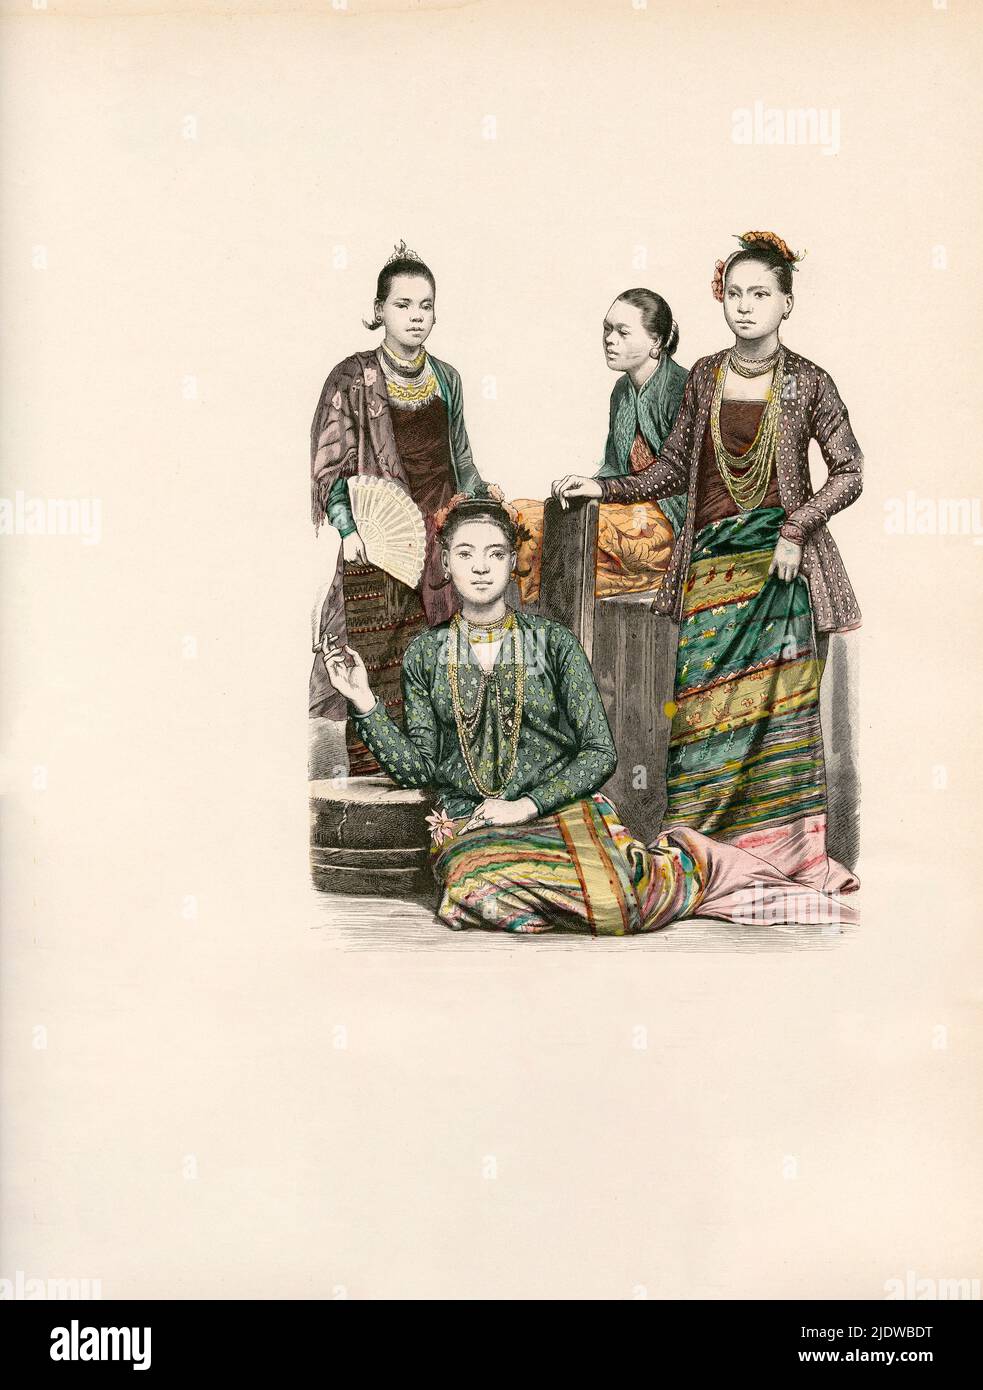 Burmese Women, late 19th Century, Illustration, The History of Costume, Braun & Schneider, Munich, Germany, 1861-1880 Stock Photo